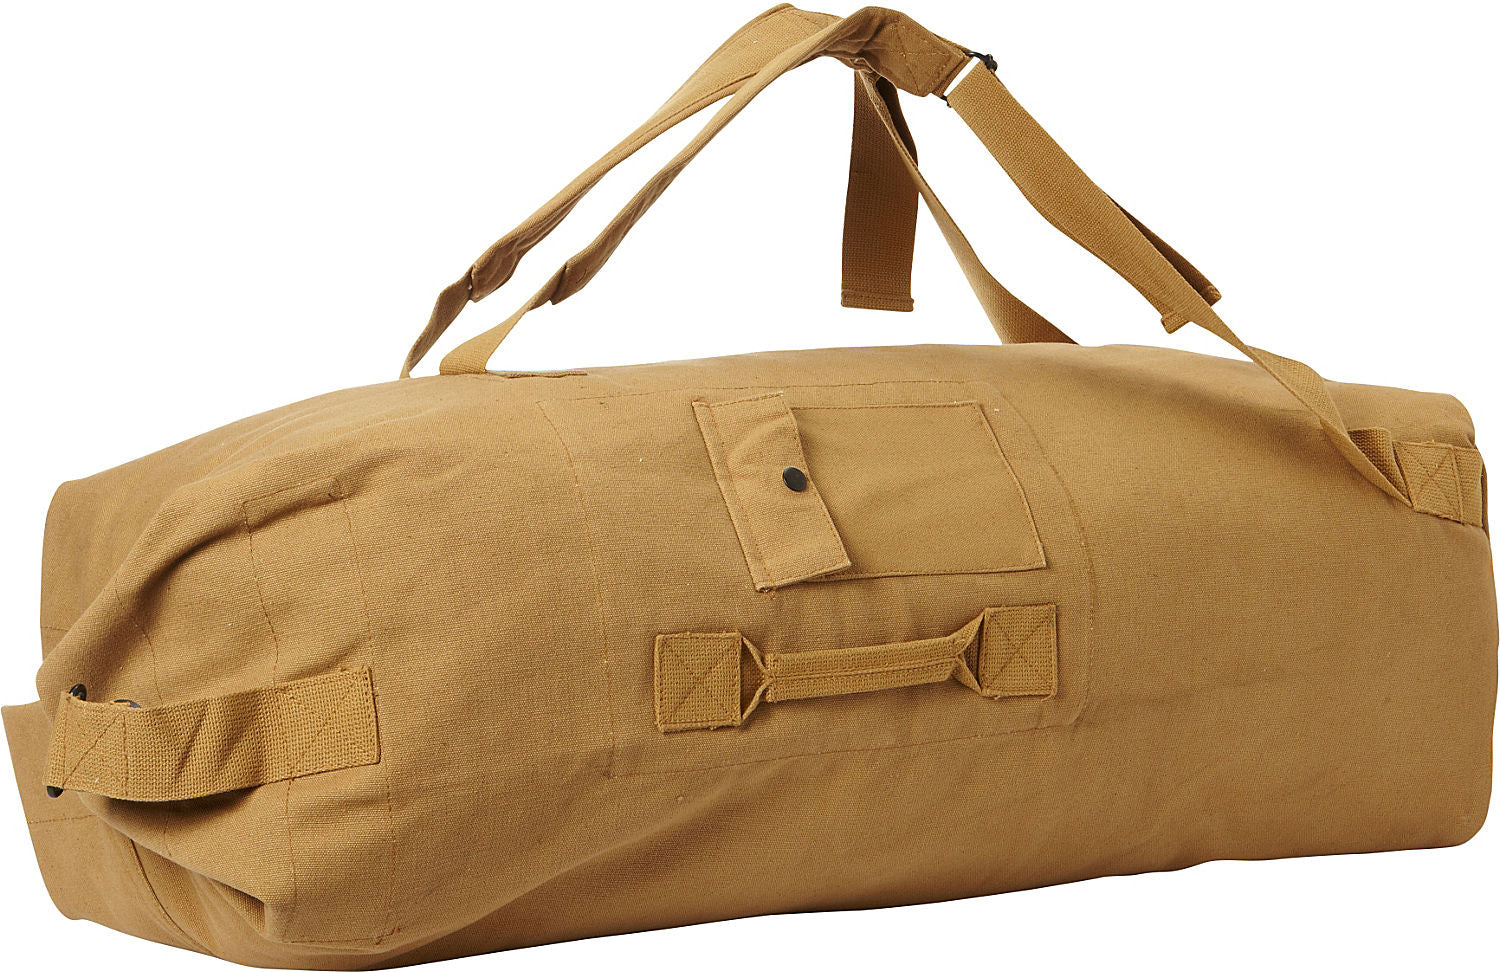 Men's Canvas Bags - Rugged and Versatile | Scaramanga